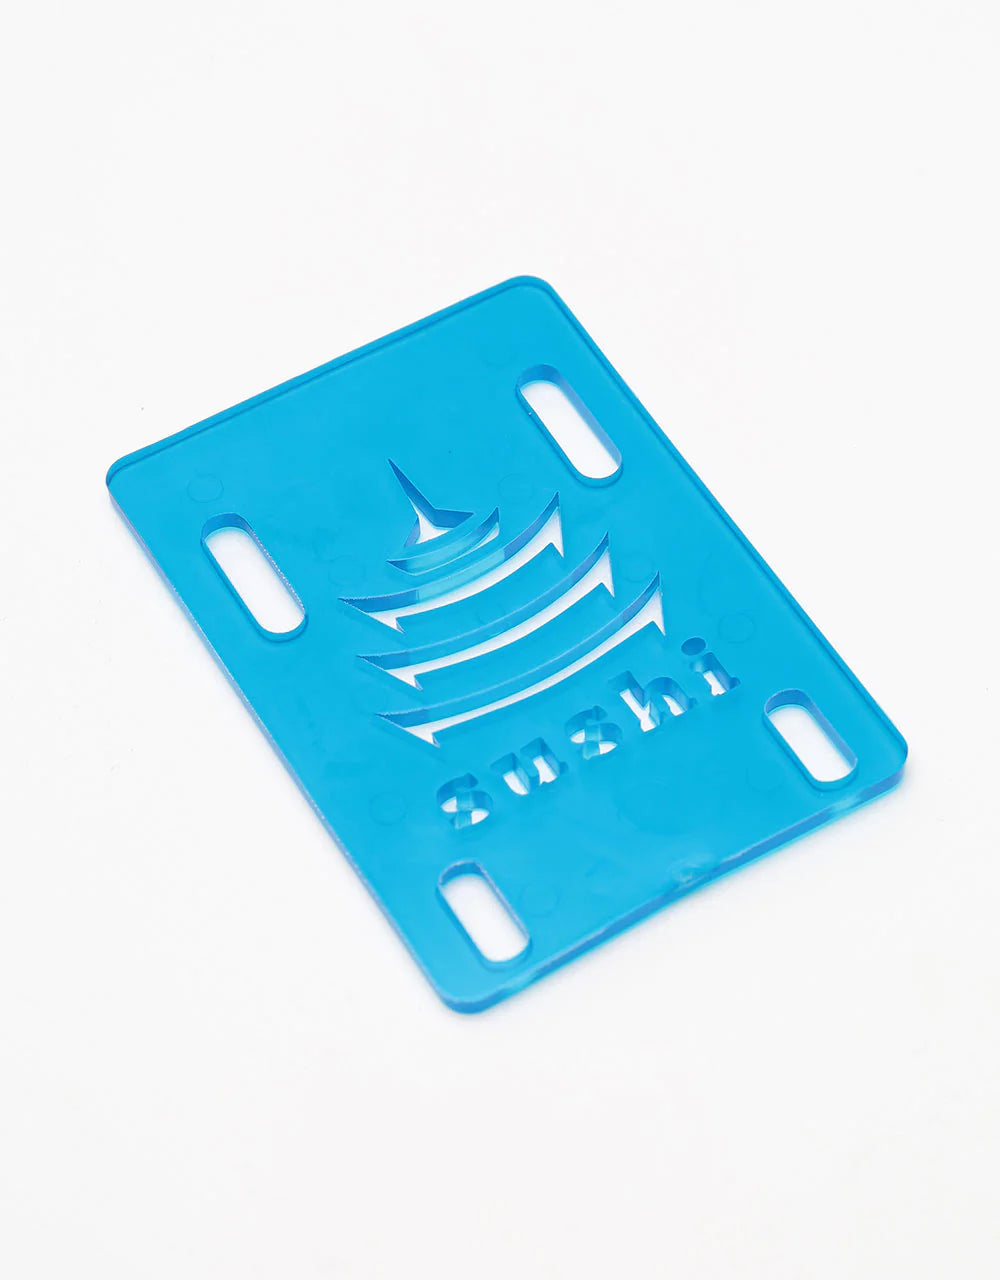 Sushi - Riser pads 1/8" Trasparente Blue